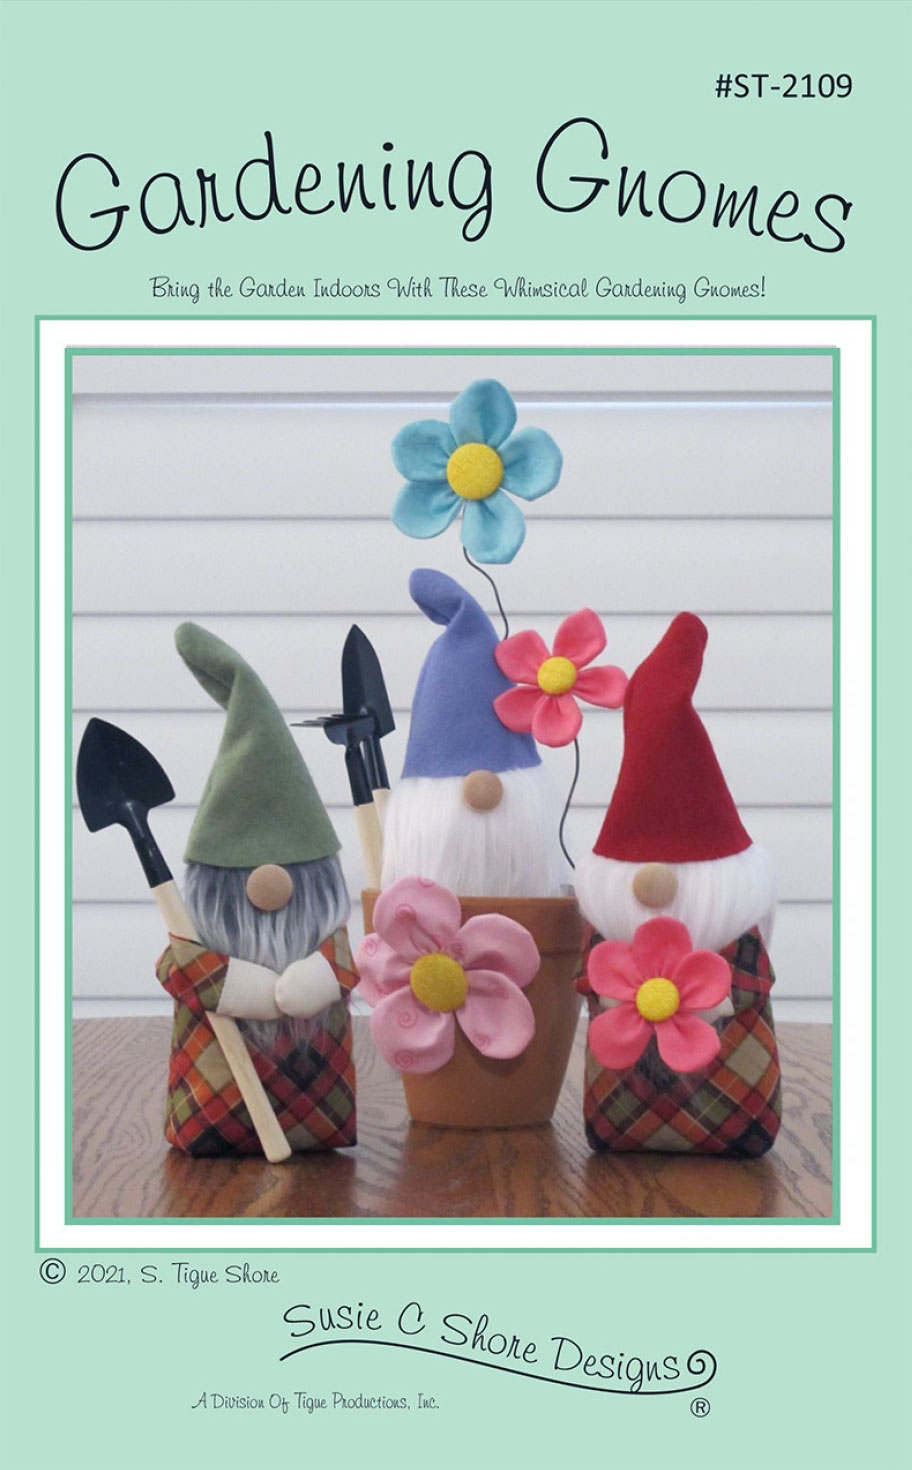 https://www.sewthankful.com/media/Susie_C_Shore_Designs/2021/Gardening-Gnomes-sewing-pattern-Susie-C-Shore-front.jpg